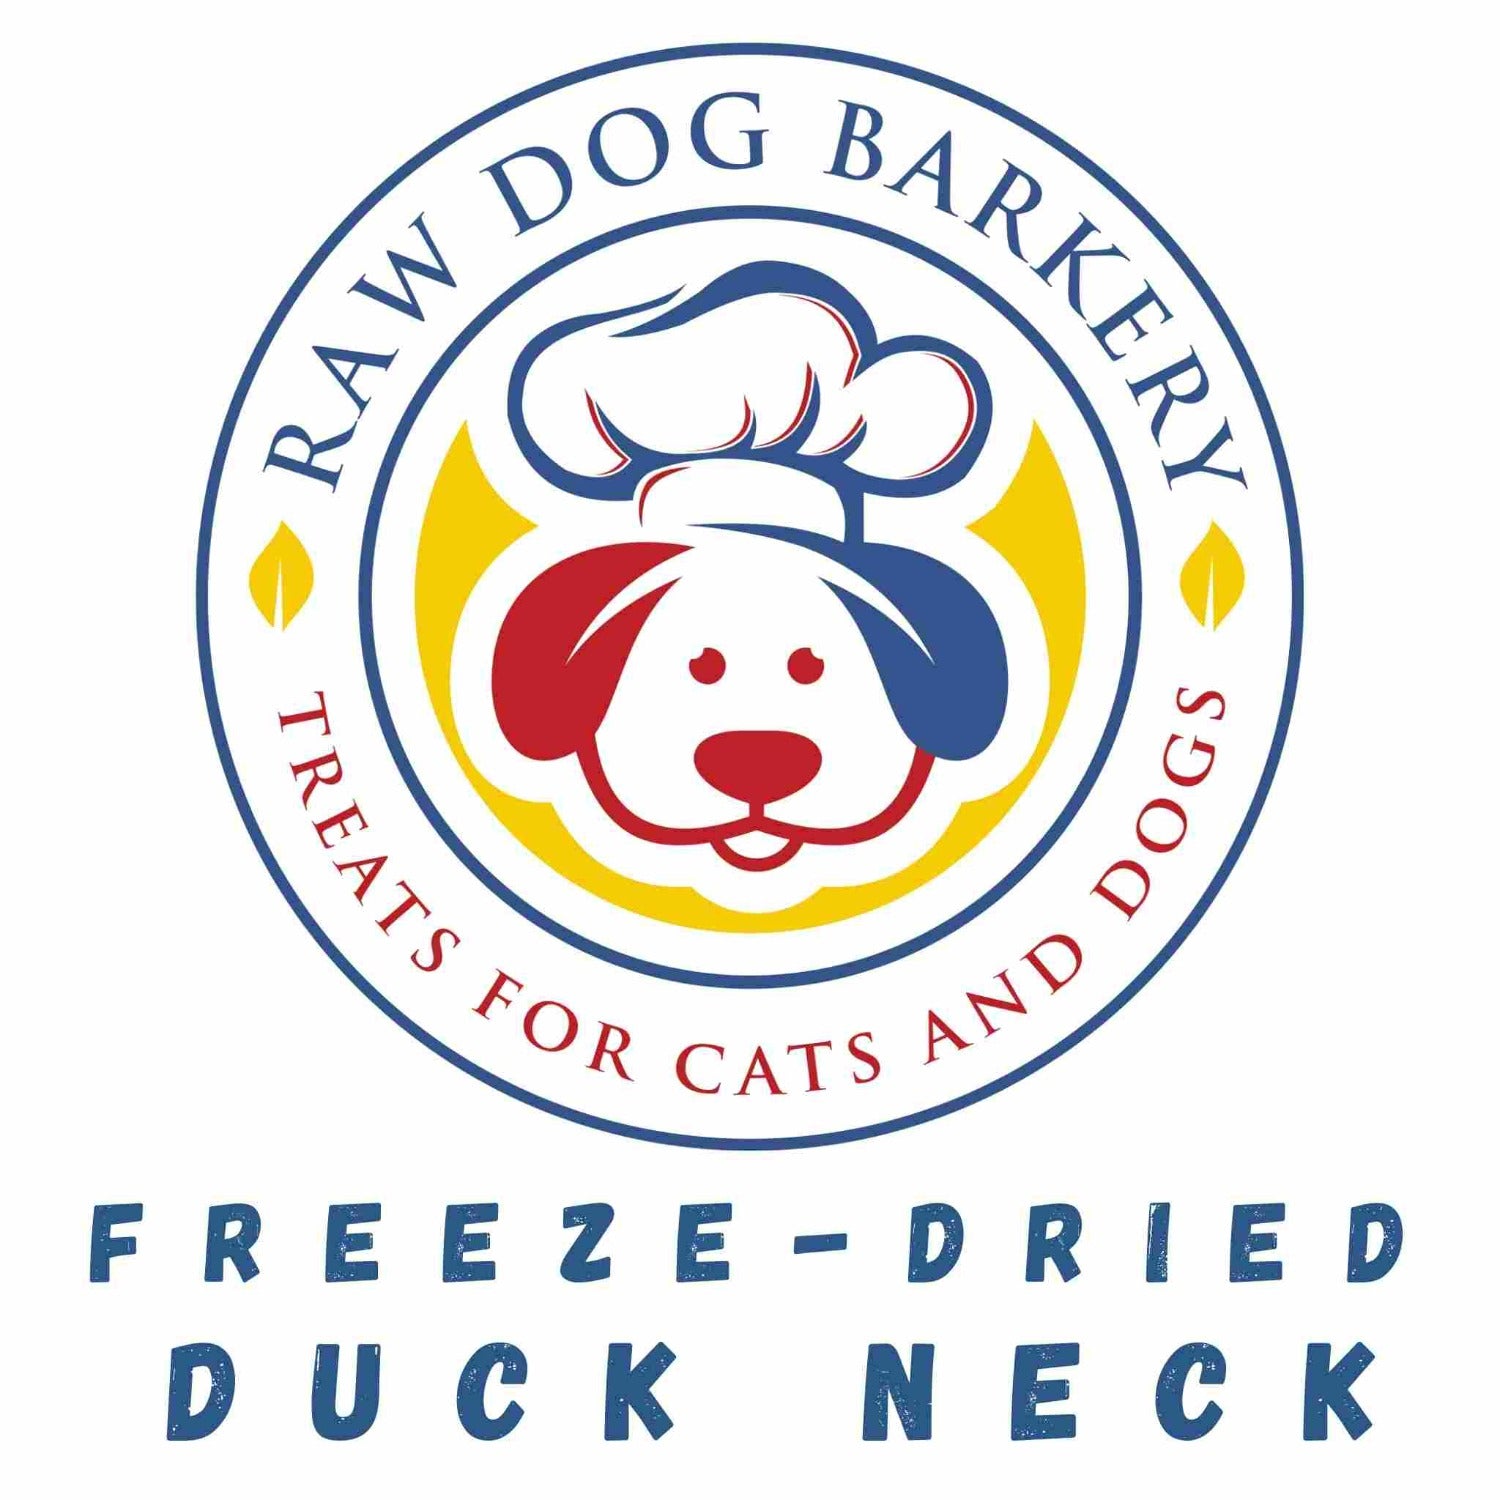 Duck Neck